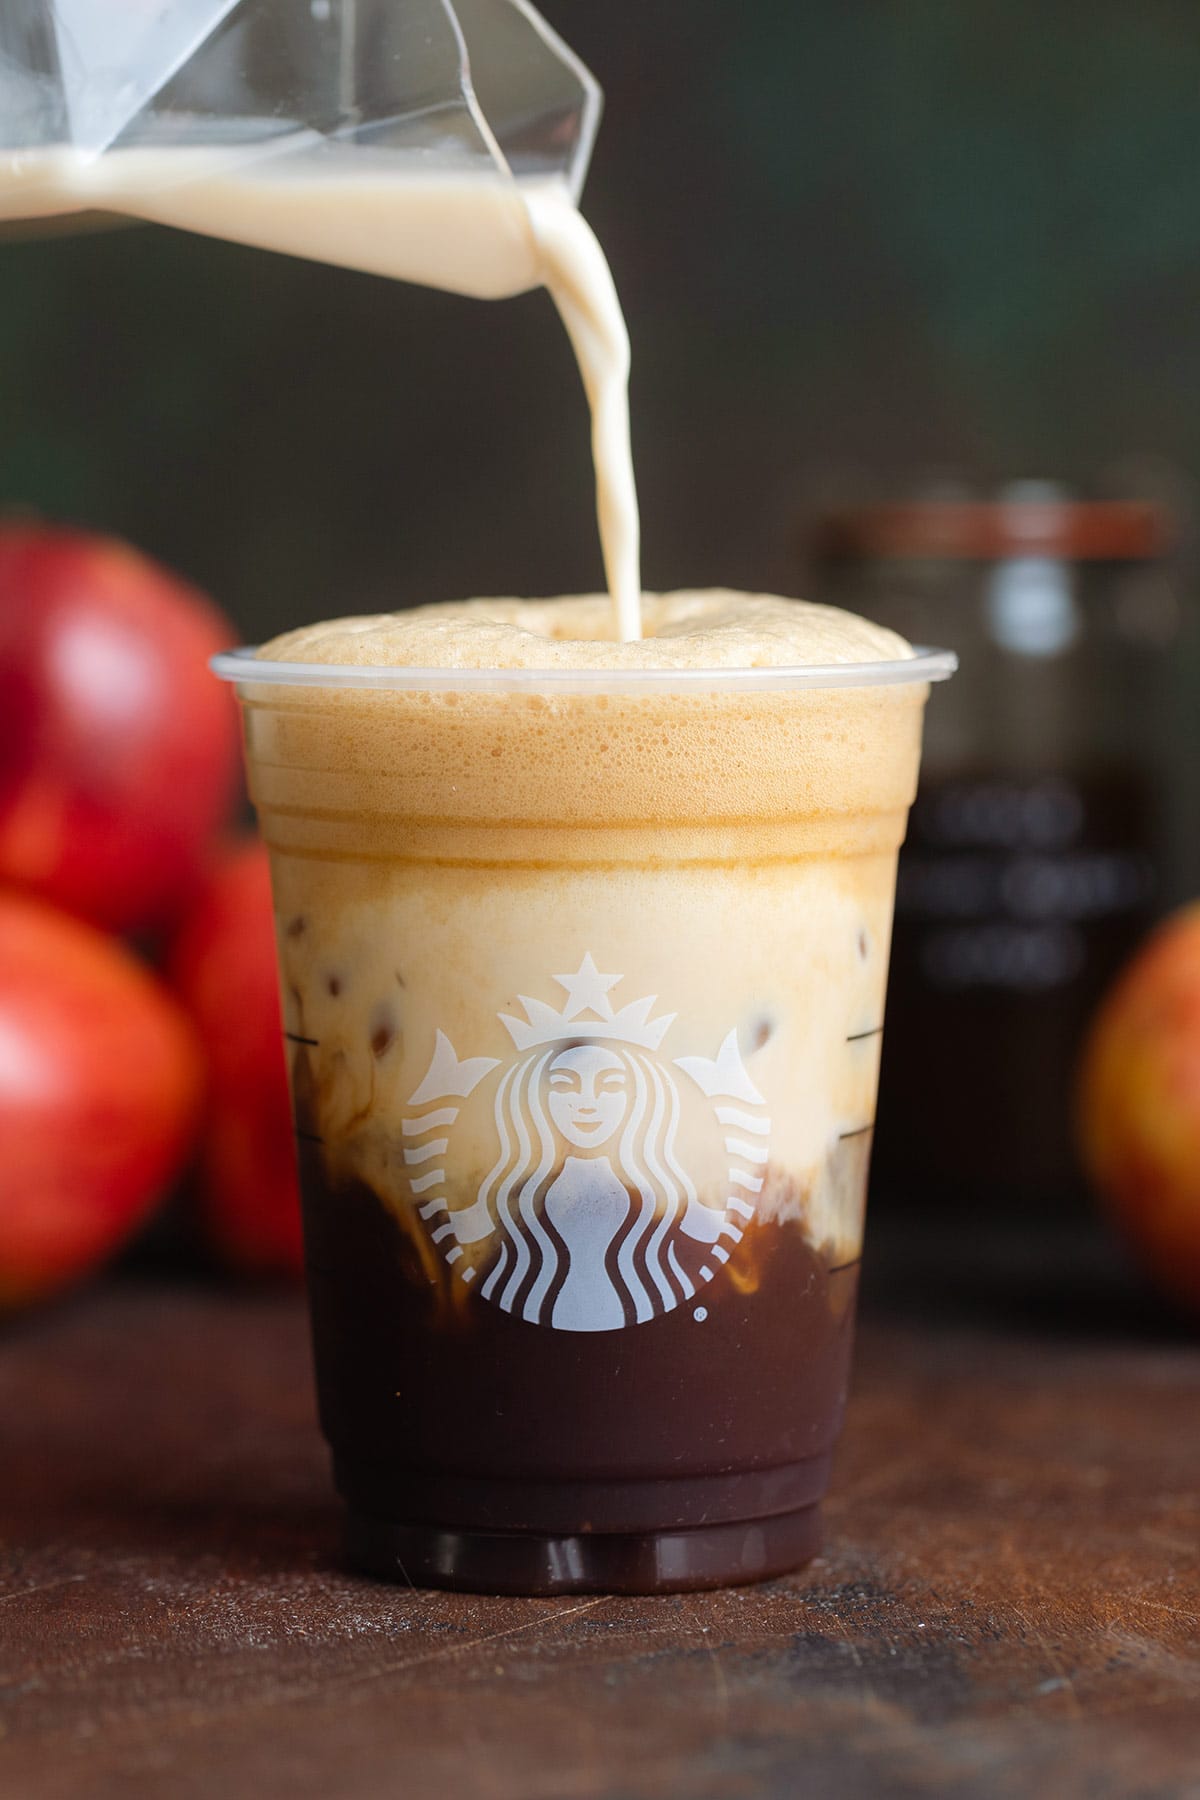 Oat milk being poured into shaken espresso in a plastic Starbucks cup.